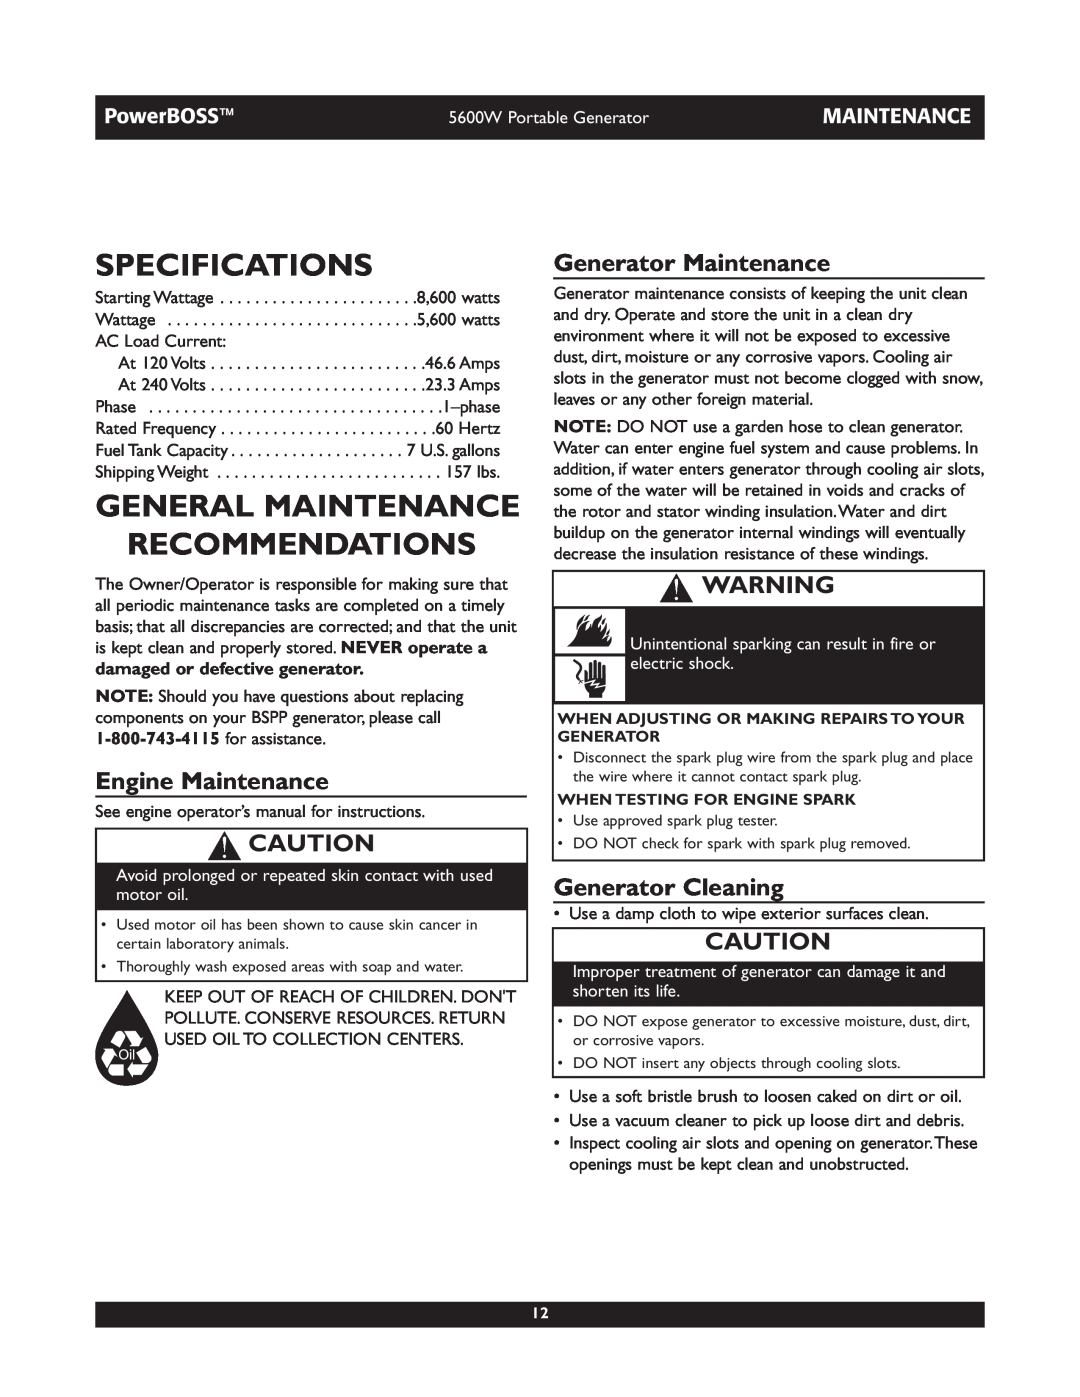 Briggs & Stratton 30230 Specifications, General Maintenance Recommendations, Engine Maintenance, Generator Maintenance 